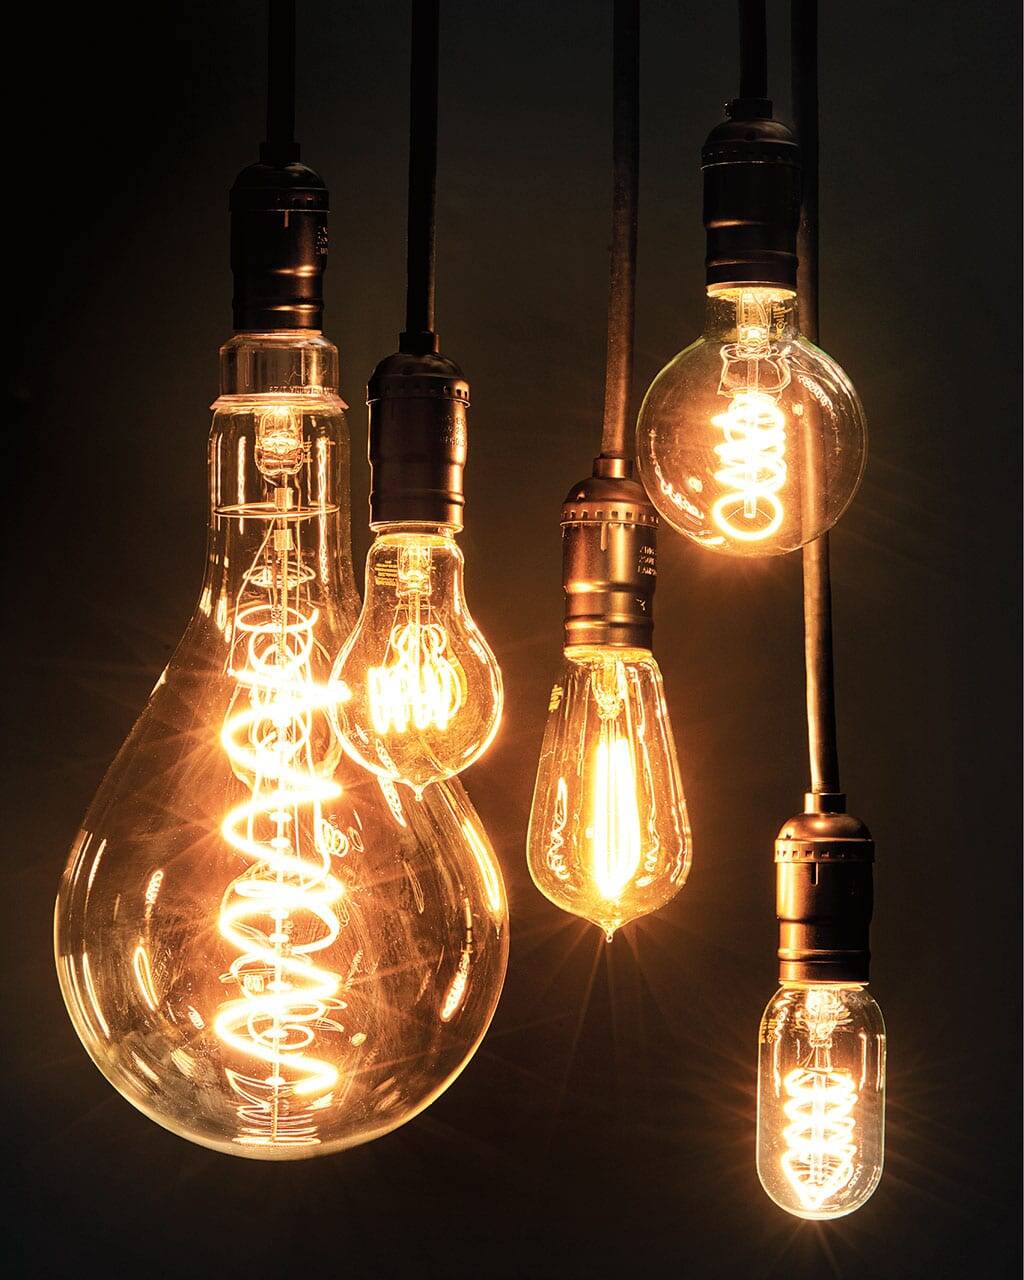 LED企业亟须加强知识产权管理和应诉能力